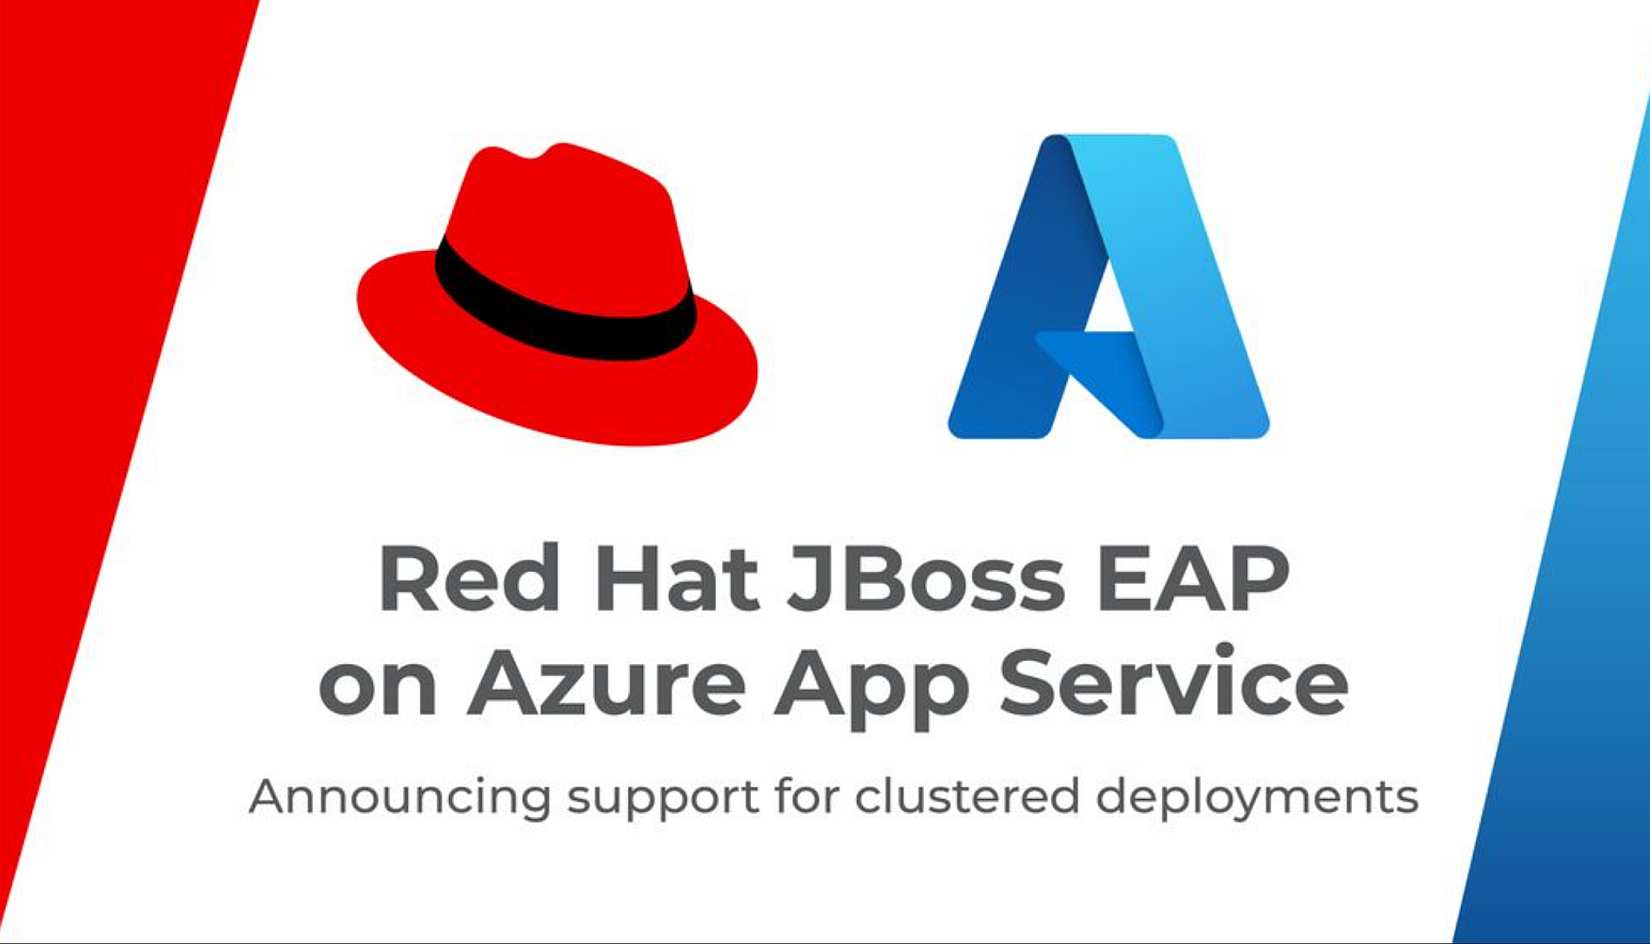 RedHat, Red Hat, Hboss , microsoft Azure